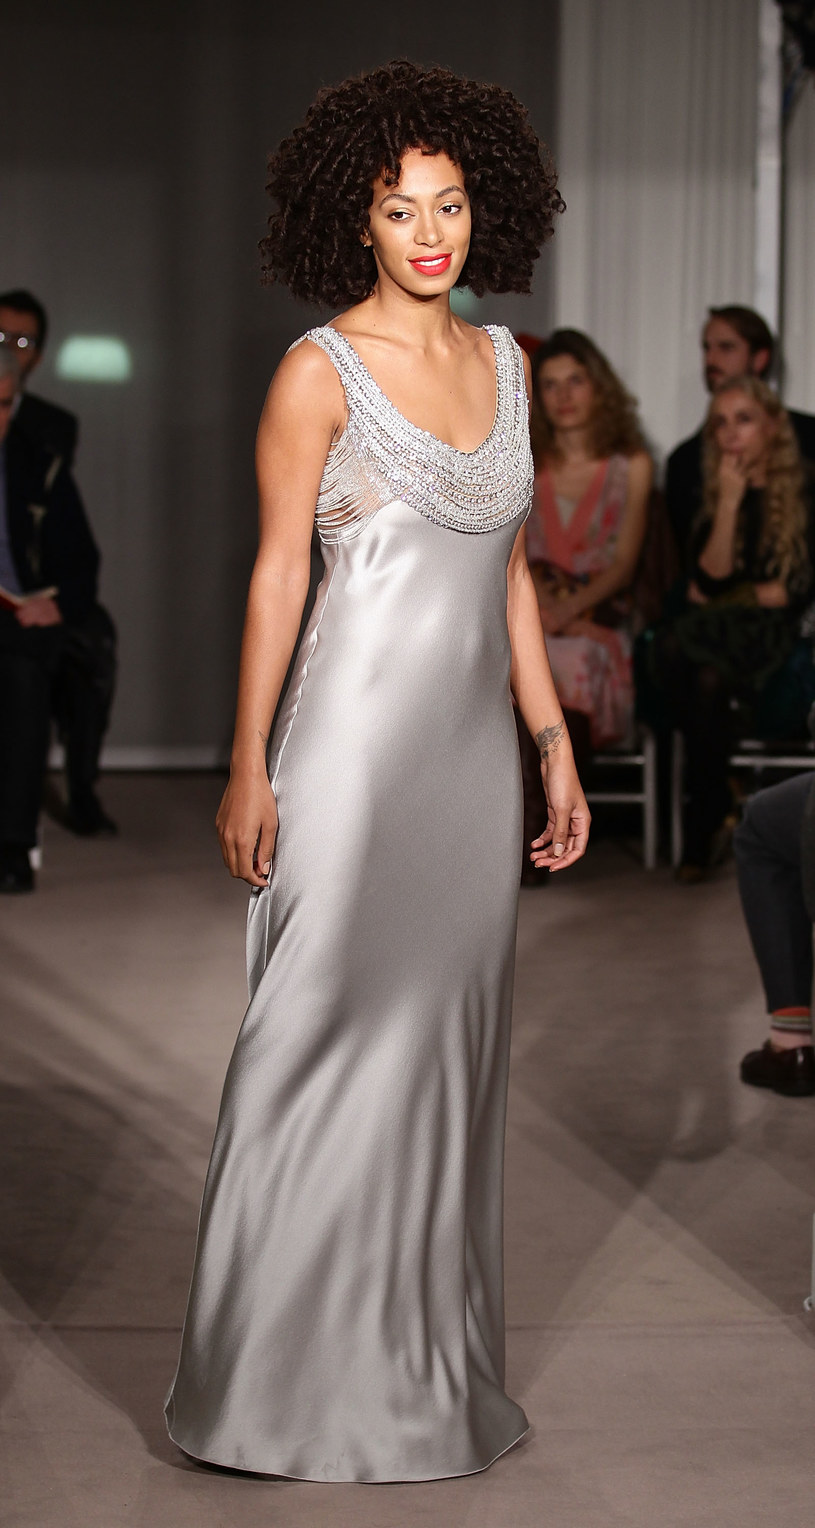 Solange Knowles na pokazie mody /Vittorio Zunino Celotto /Getty Images